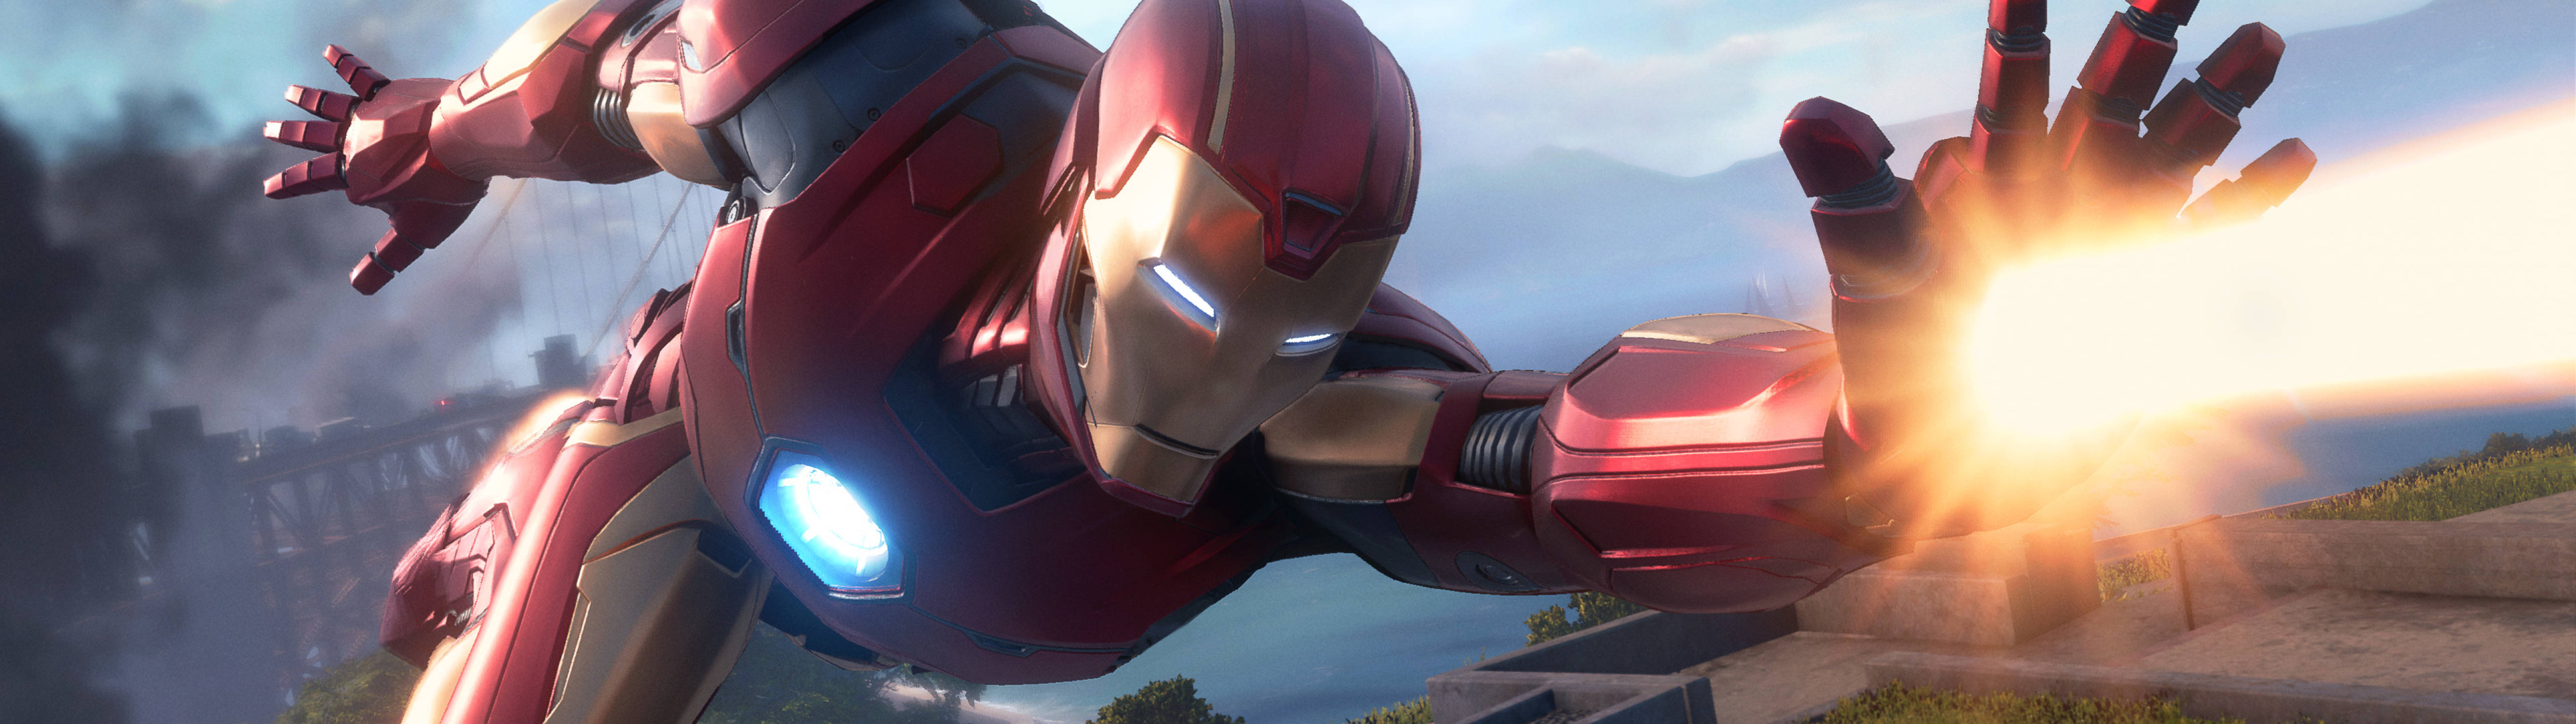 Marvel's Ironman Shooting 5120 X 1440 Background